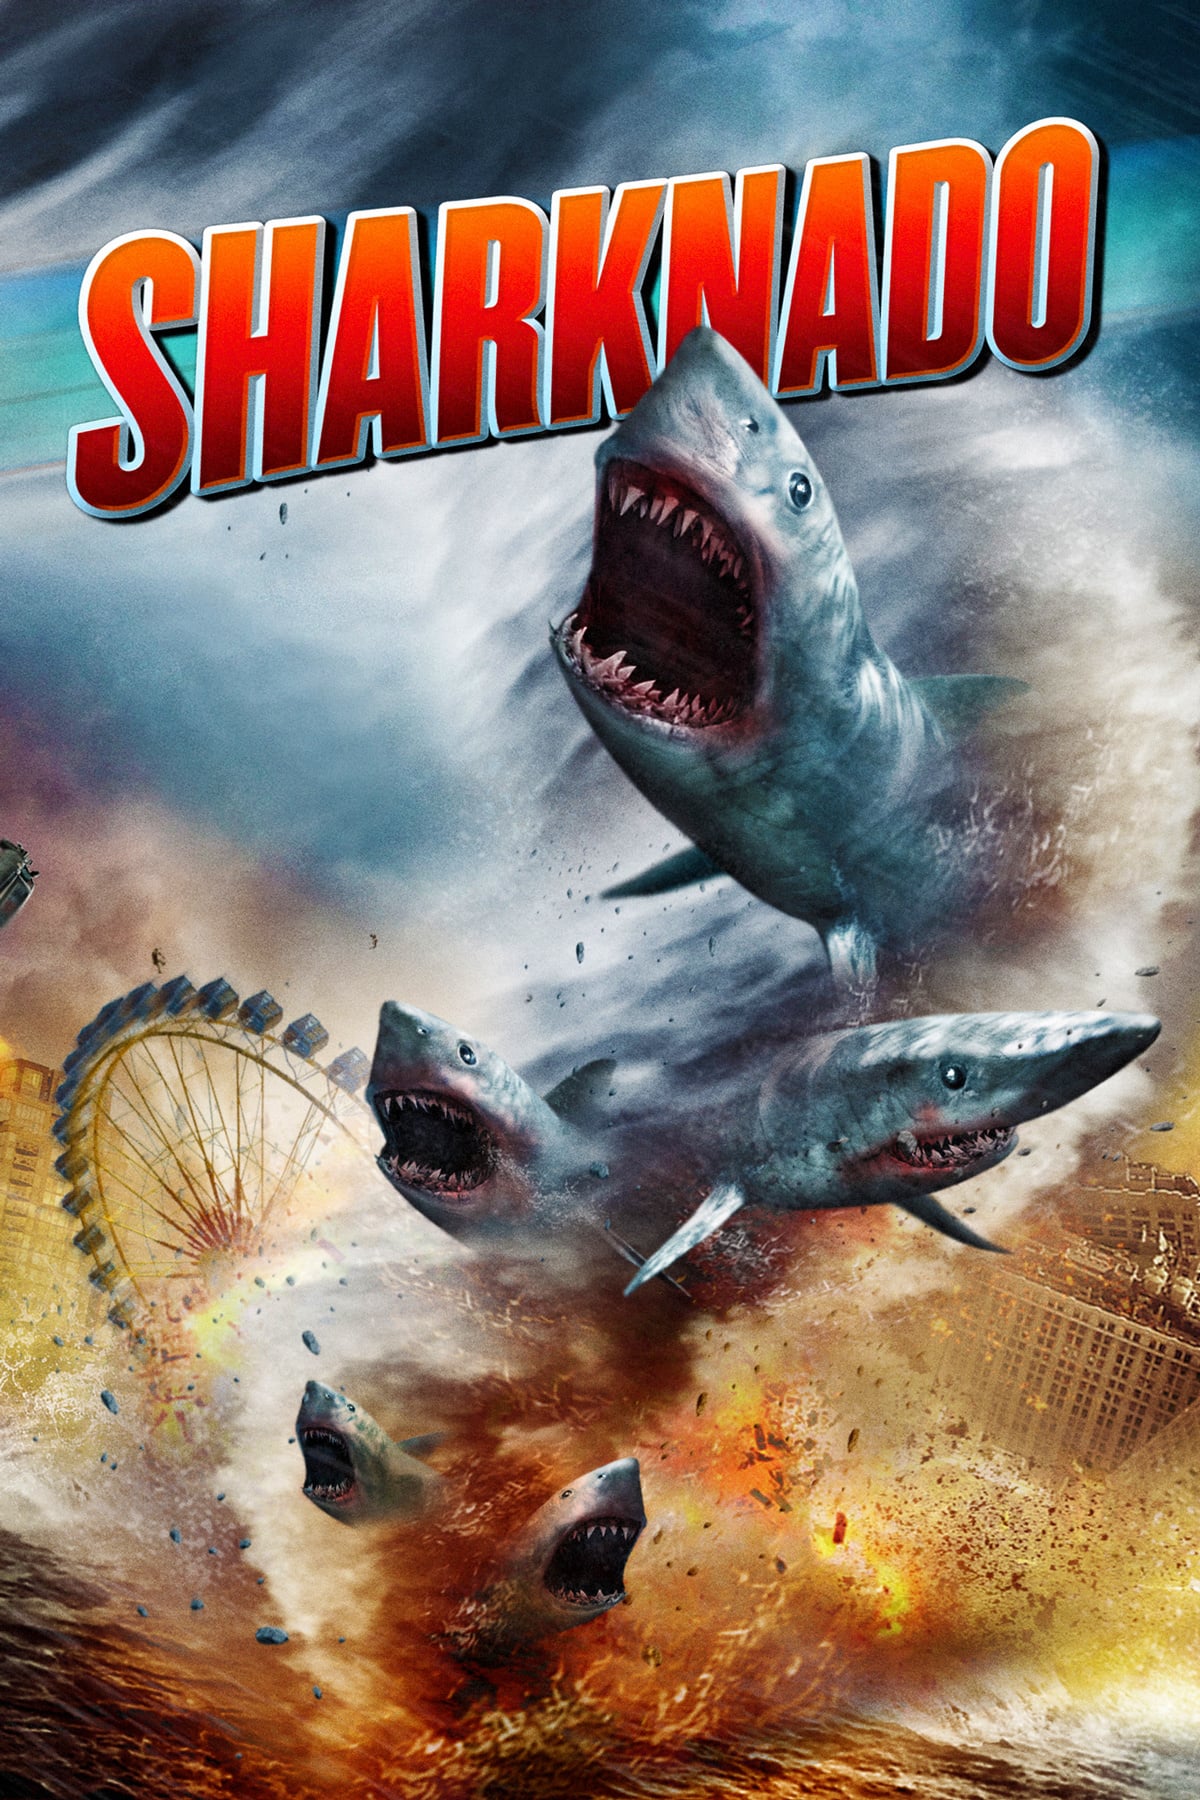 Affiche du film "Sharknado"